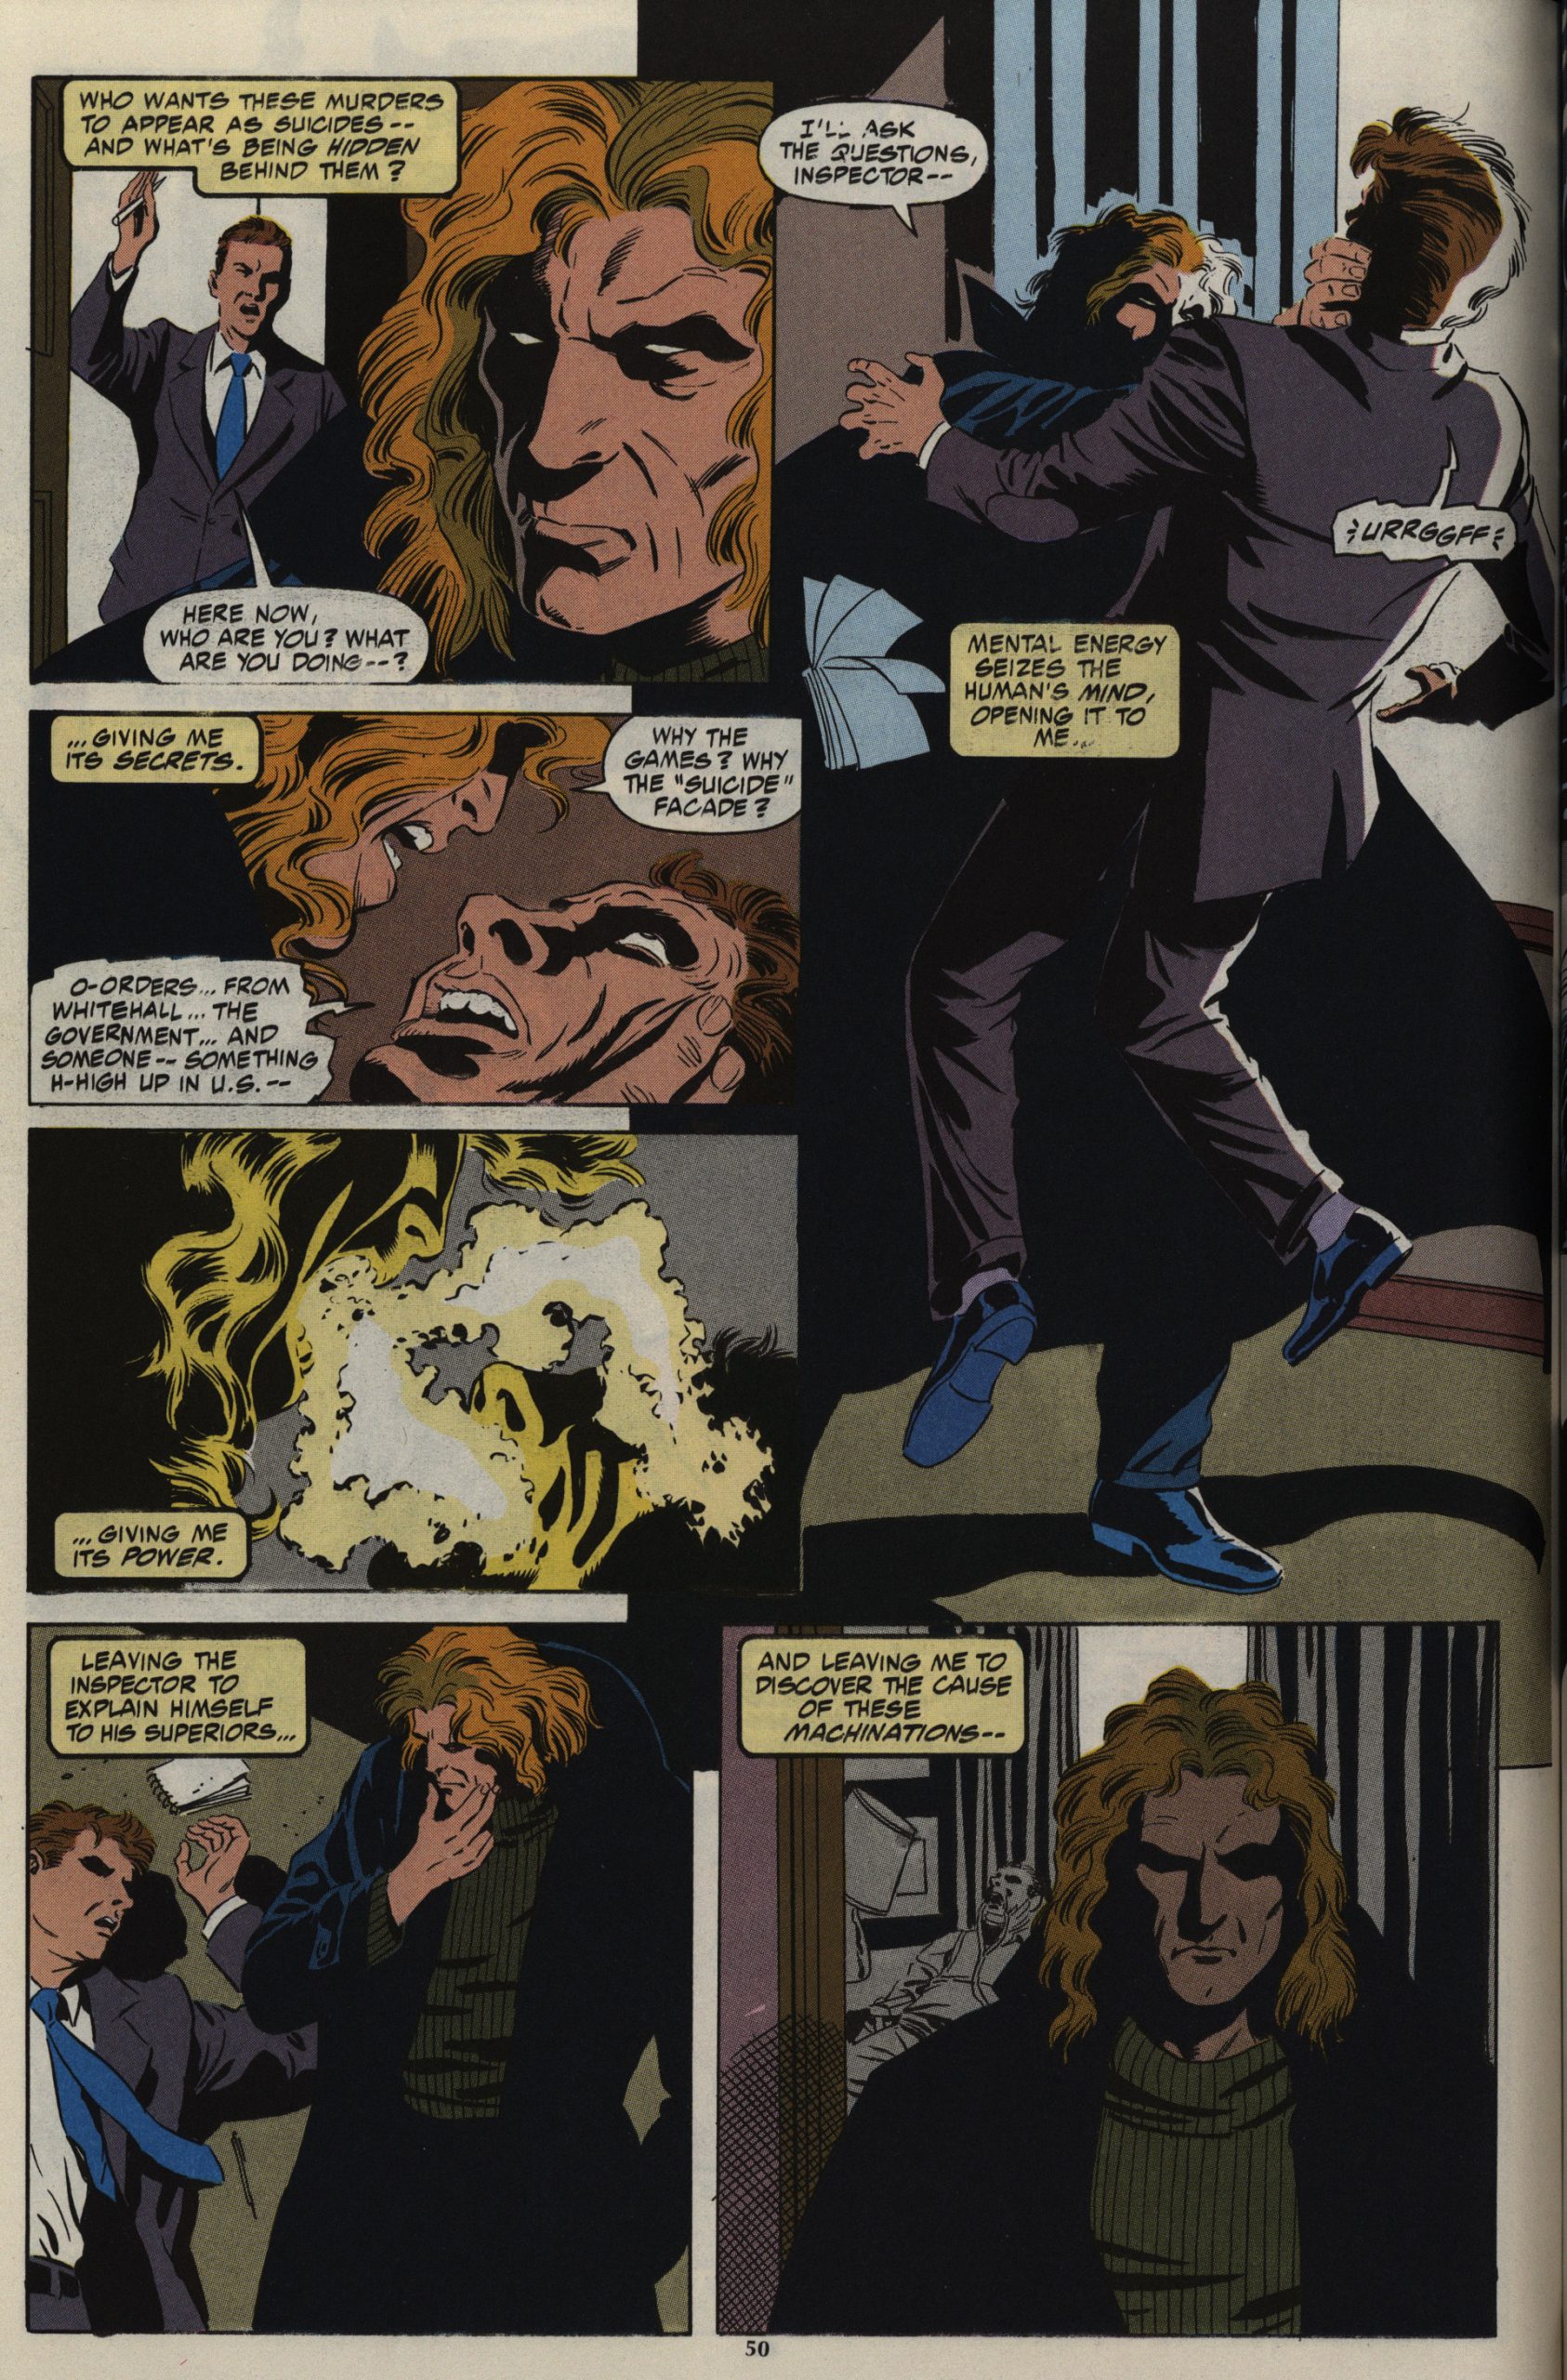 Critical Mass A Shadow-Line Saga #1 January 1989 Marvel Epic Comics MIGNOLA